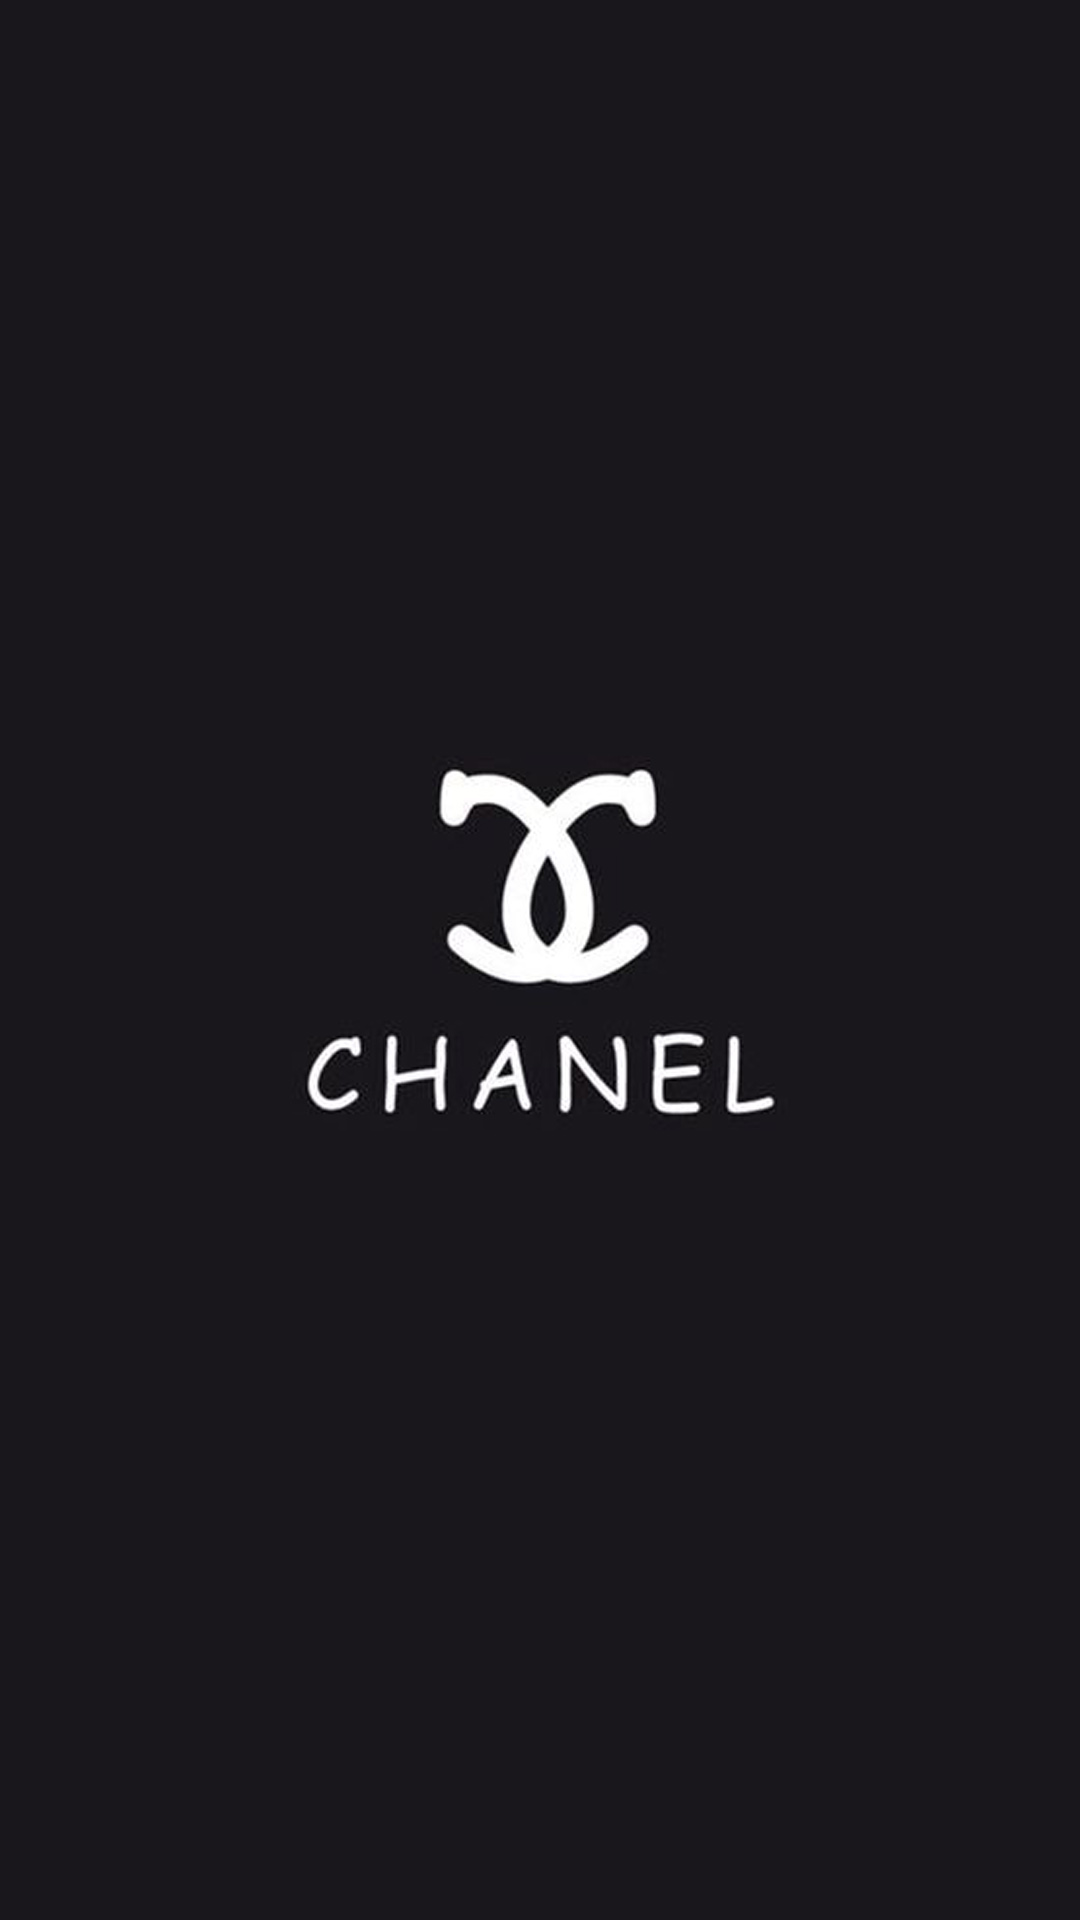 Chanel iPhone Wallpapers HD - PixelsTalk.Net